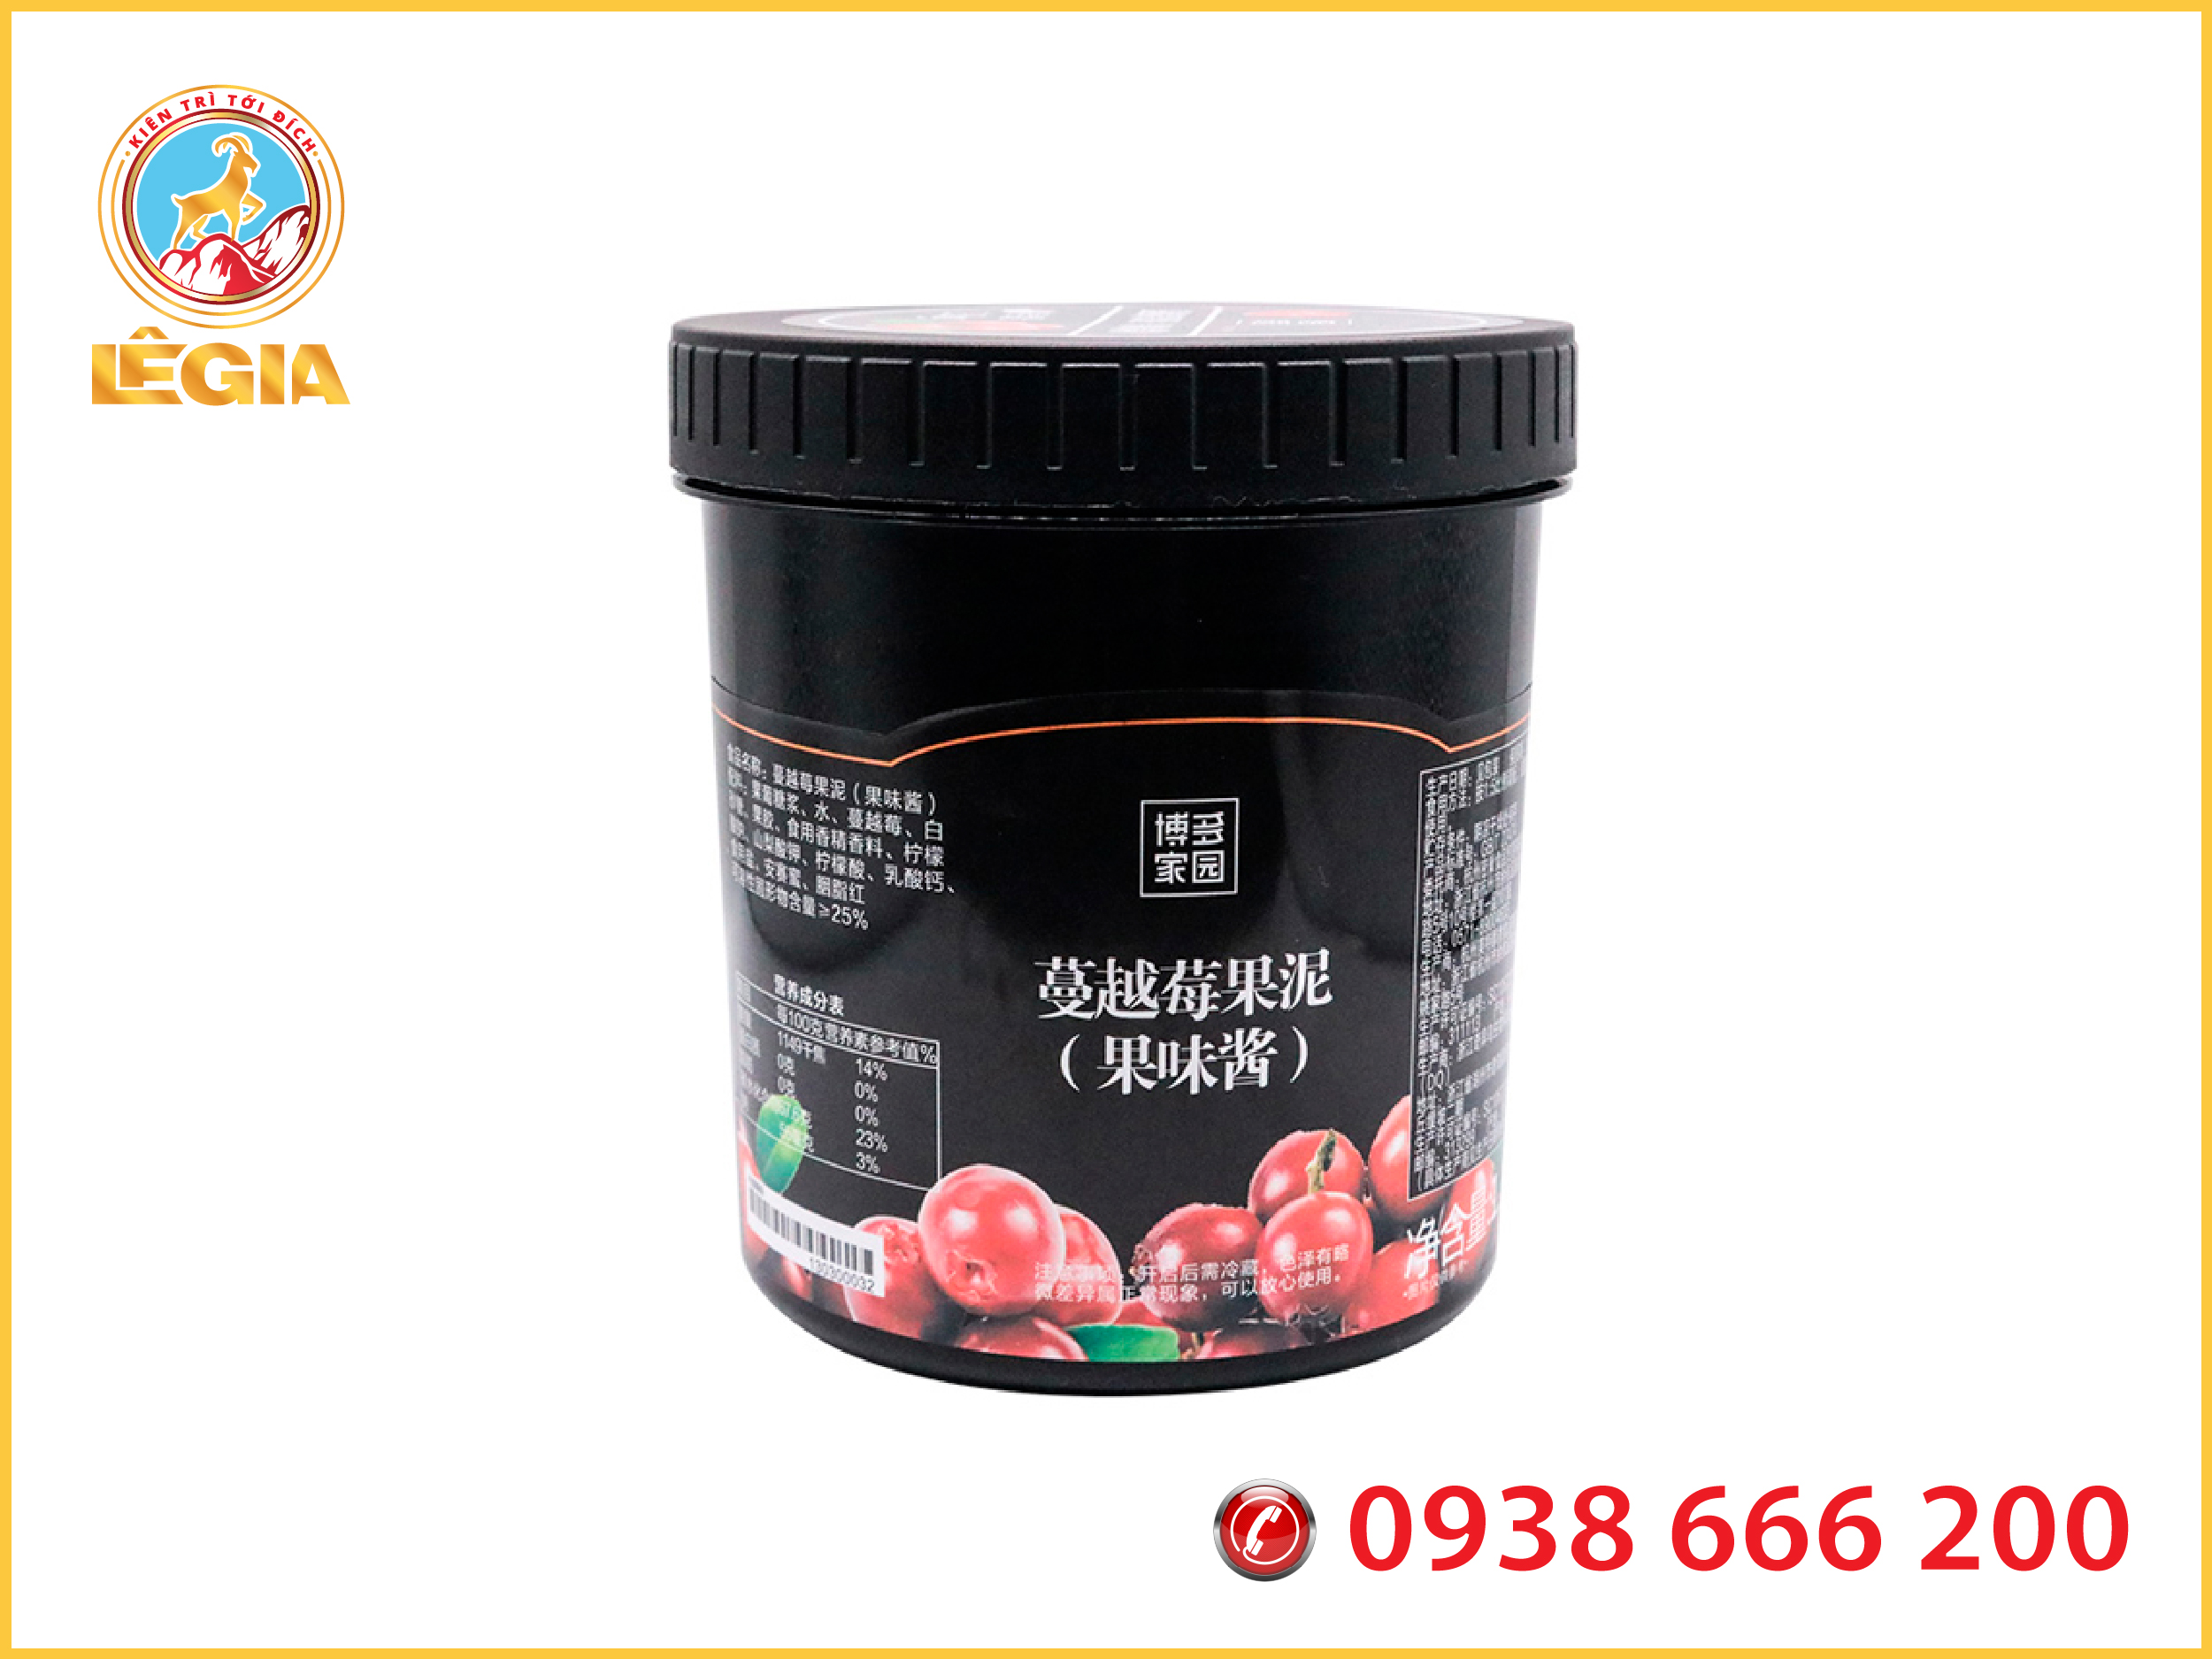 Sốt Boduo Nam Việt Quất 1.3kg - Boduo Cranberry Puree Fruit Flavoured Jam